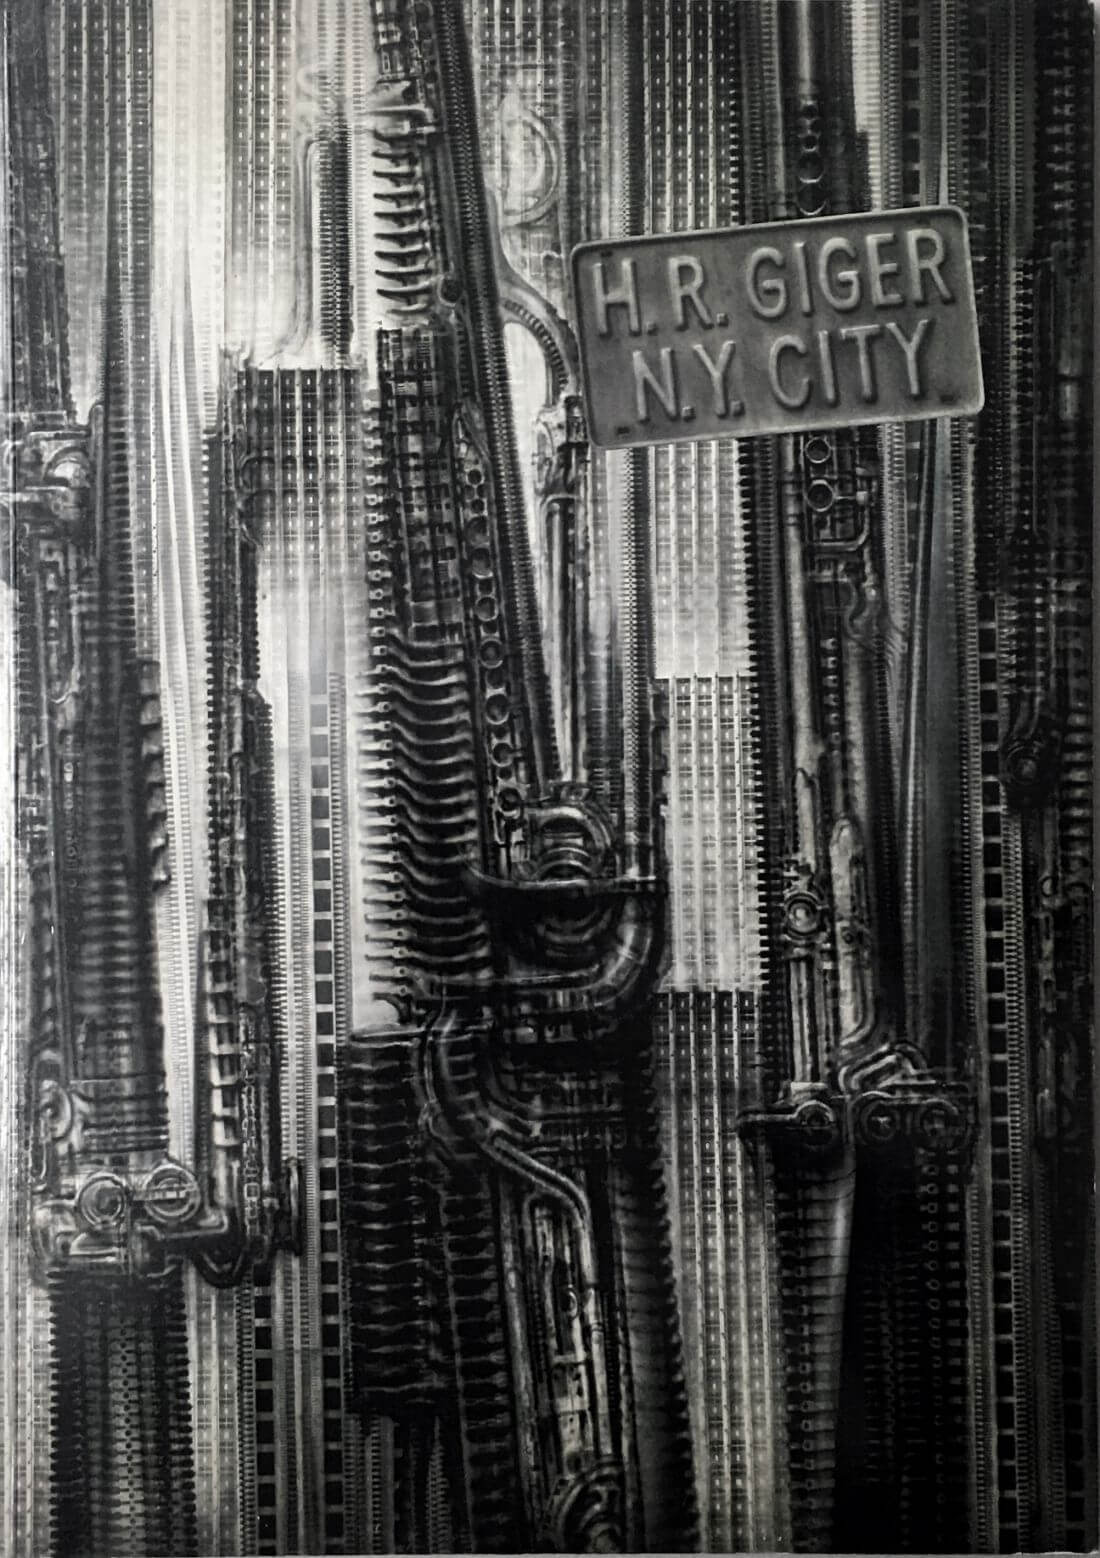 vaskepulver Misvisende Klage New York City (N Y City) - H R Giger - Futurism Art Poster - Posters by H R  Giger Artworks | Buy Posters, Frames, Canvas & Digital Art Prints | Small,  Compact, Medium and Large Variants